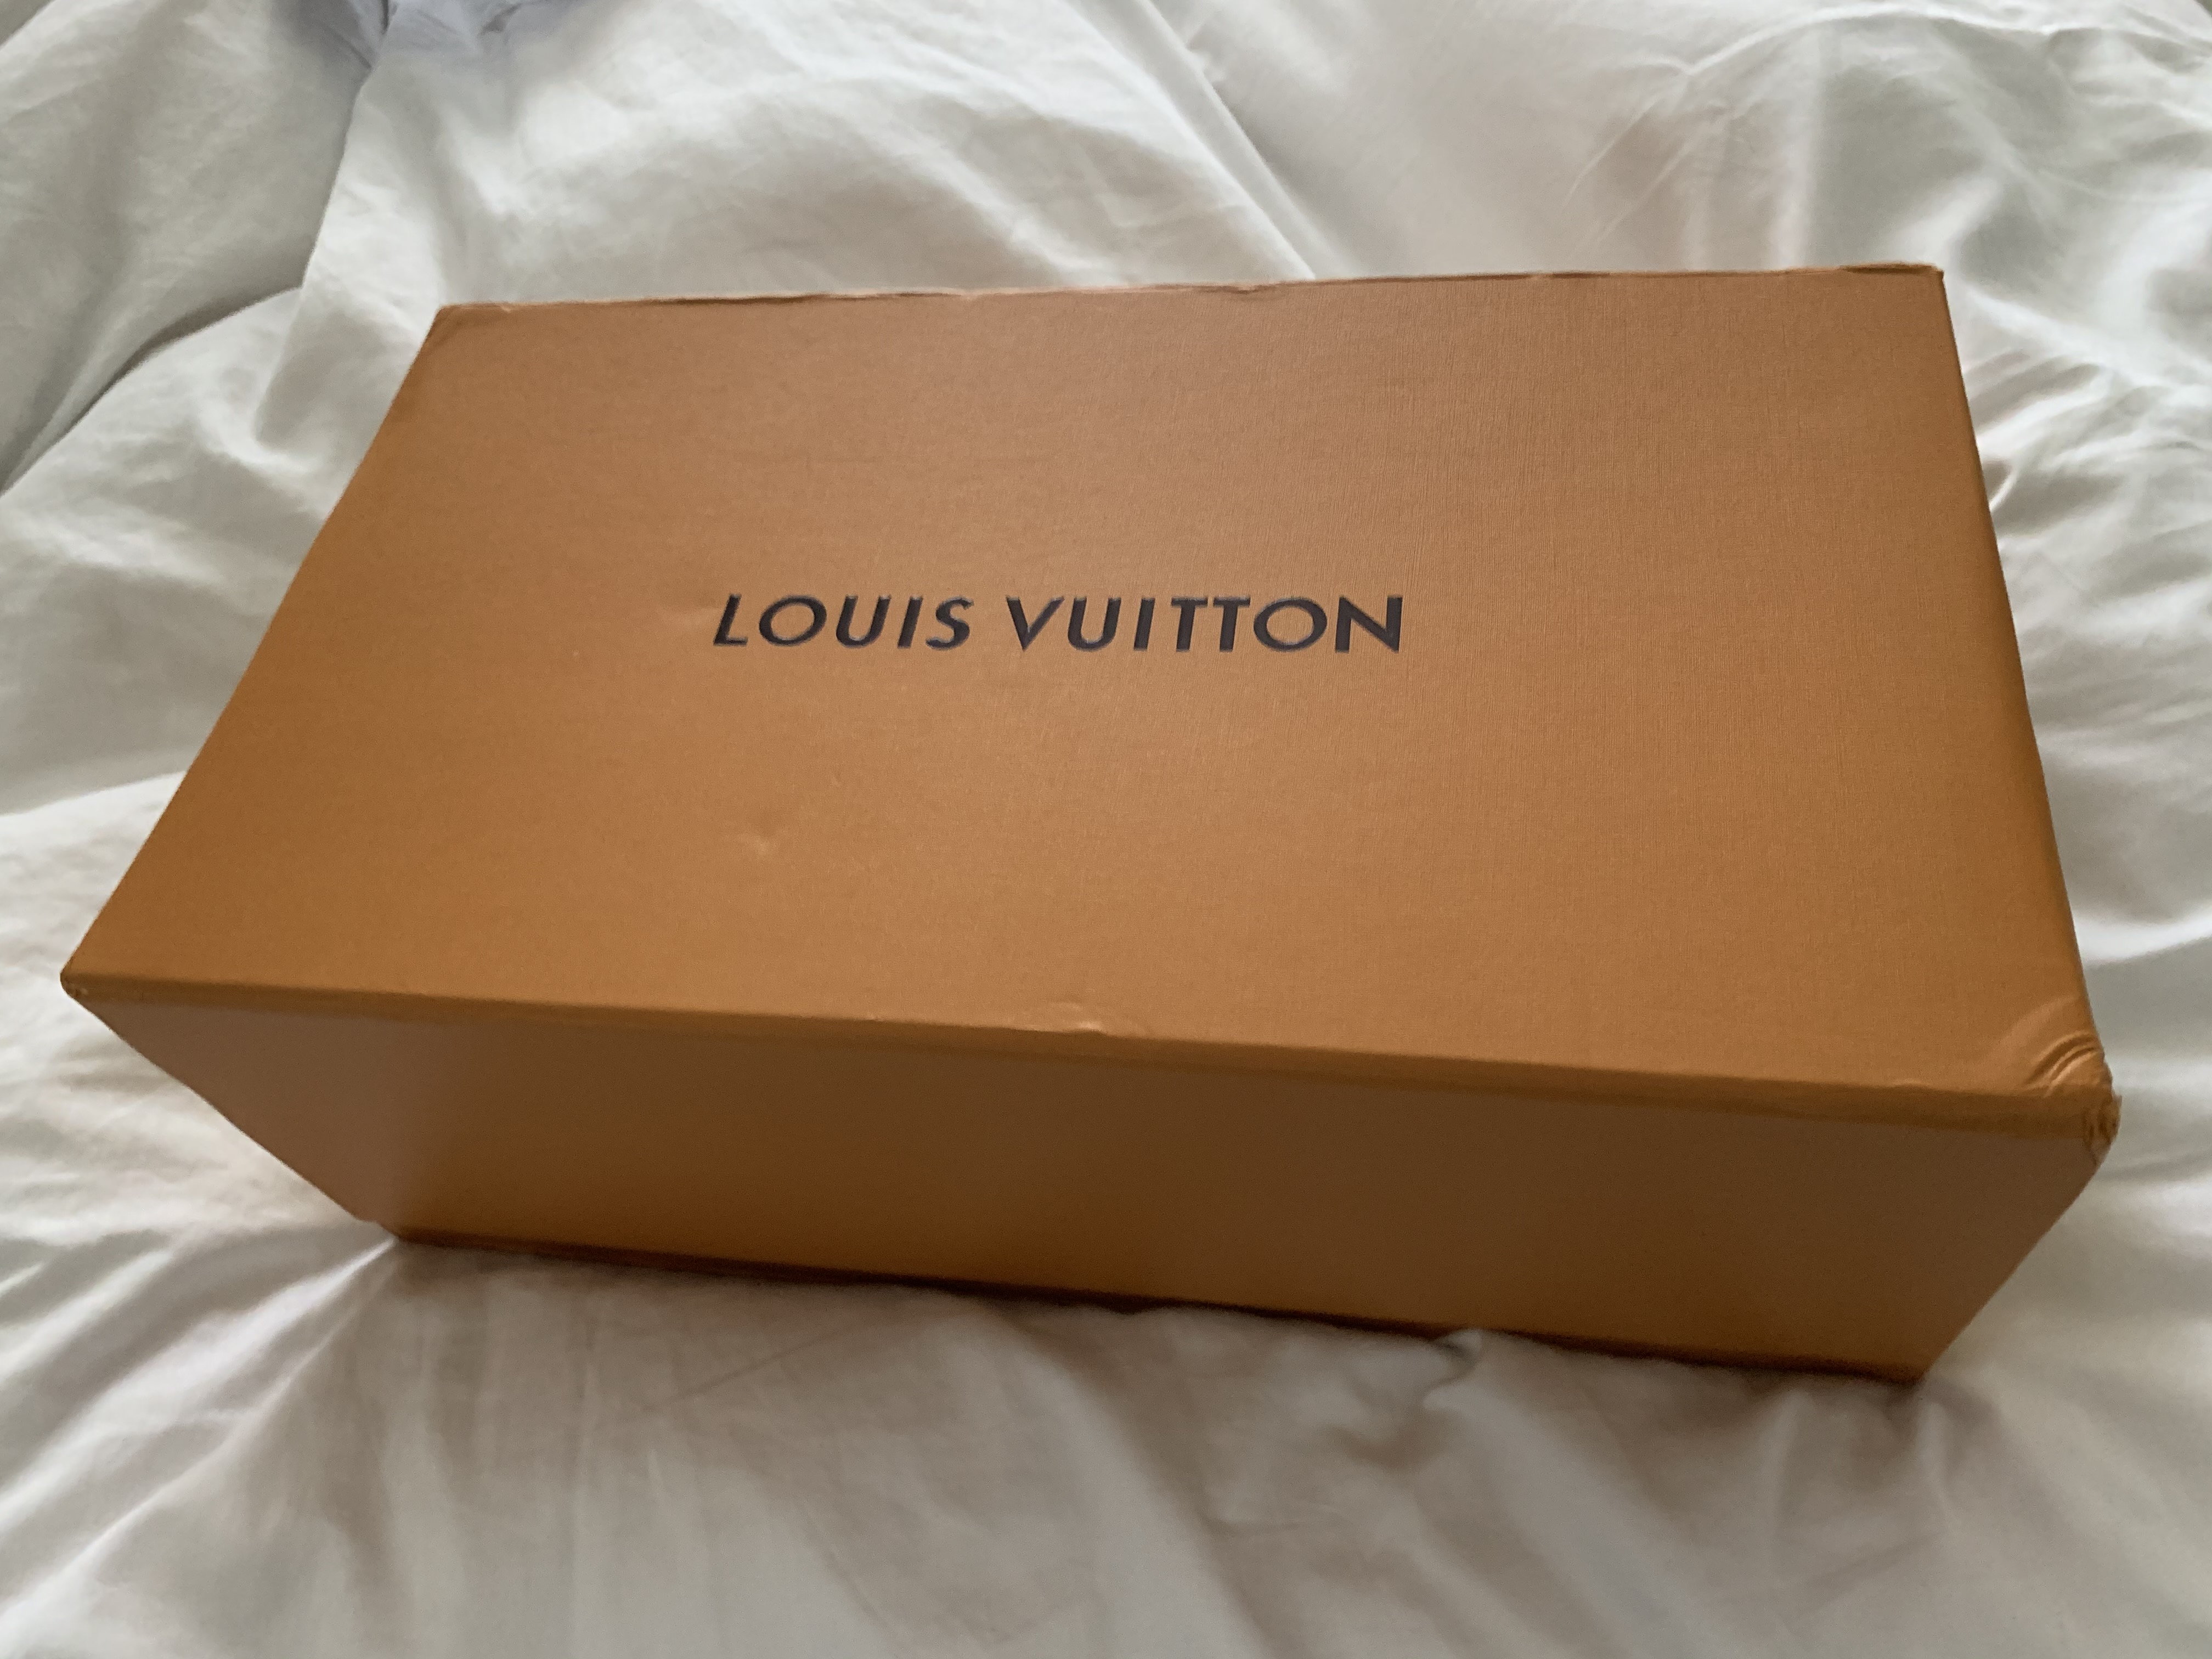 UNBOXING A $1,000 MYSTERY BOX! I got a Louis Vuitton bag 